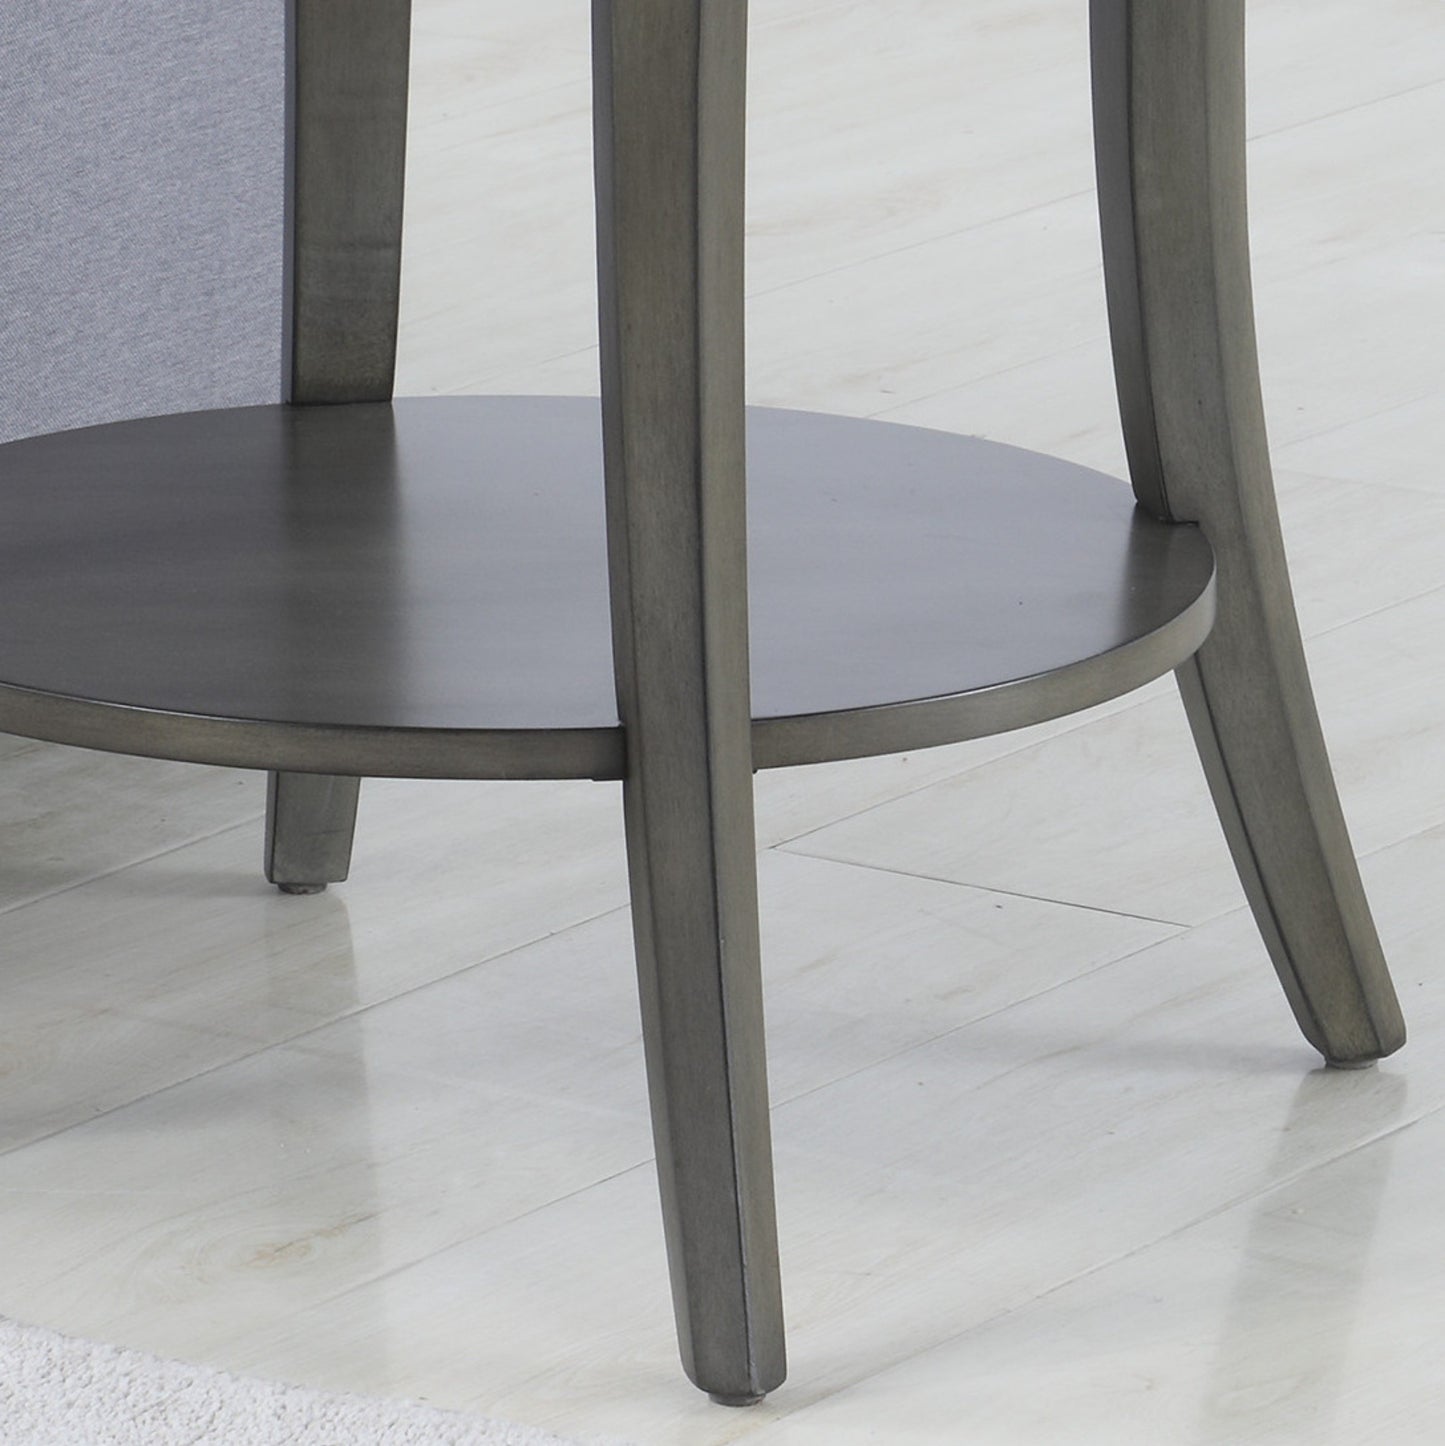 Perth Contemporary Oval Shelf Coffee Table Set, Gray